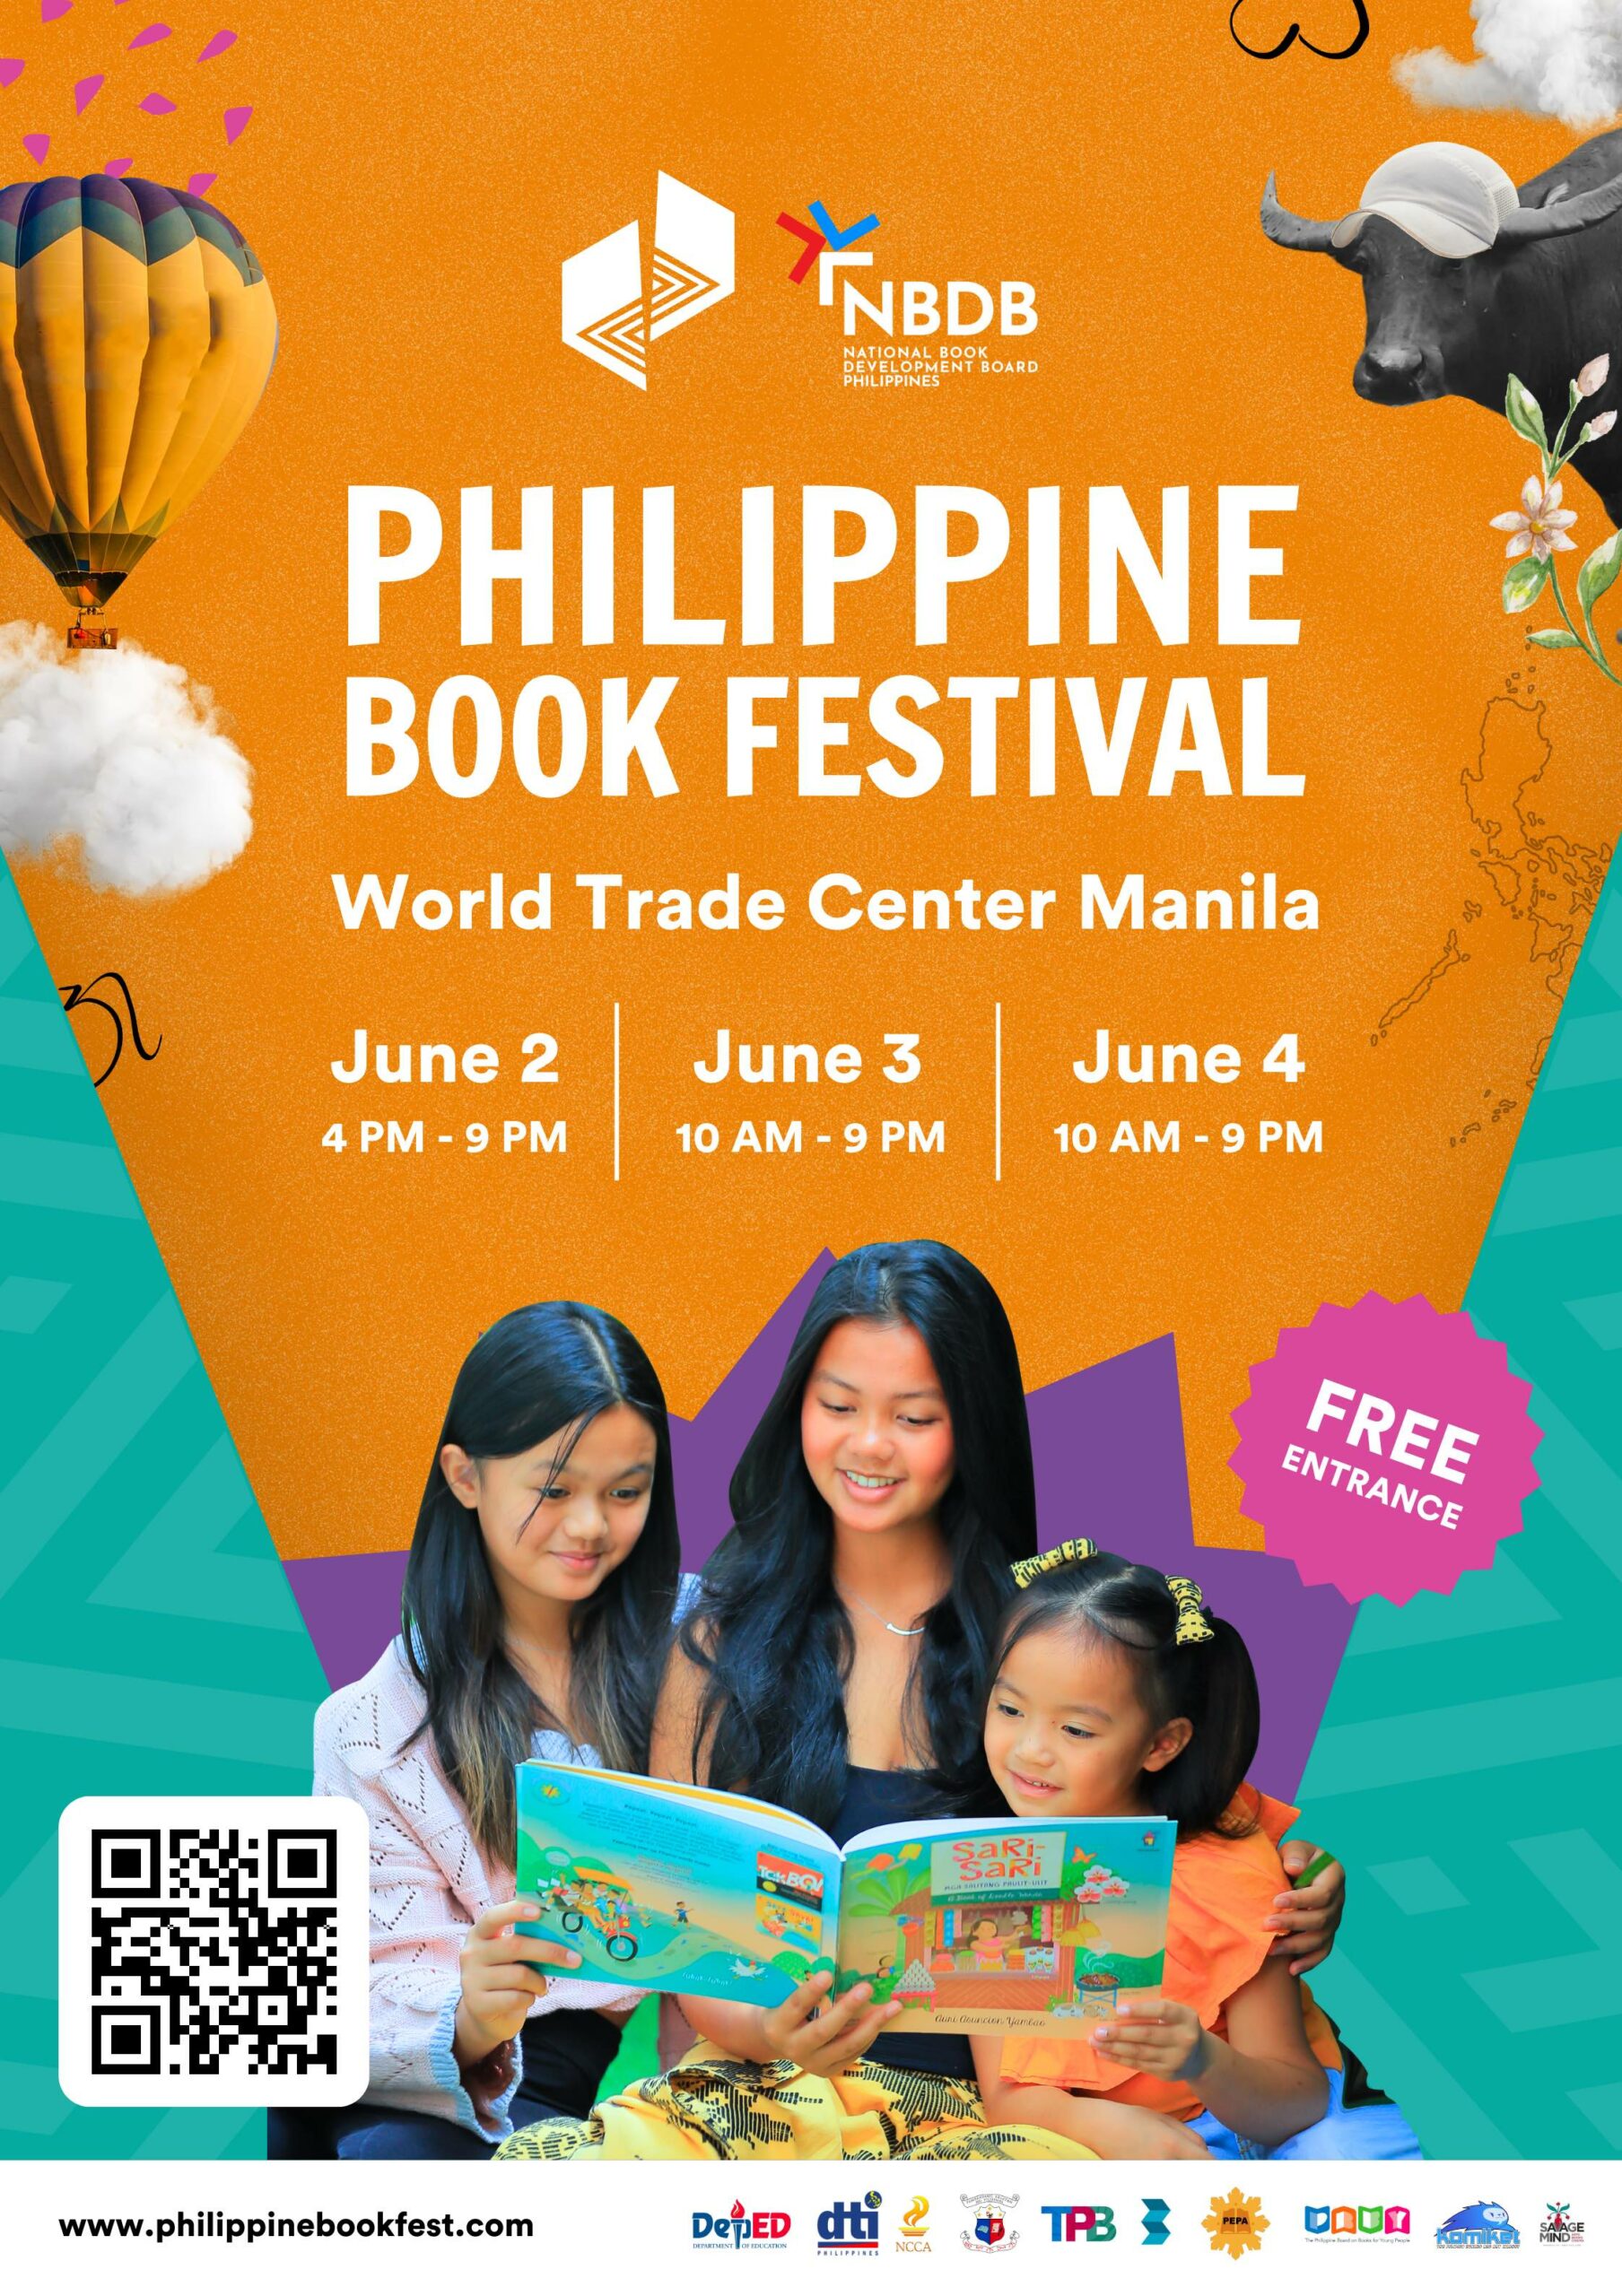 Philippine Book Festival Free entrance June 2 to June 4